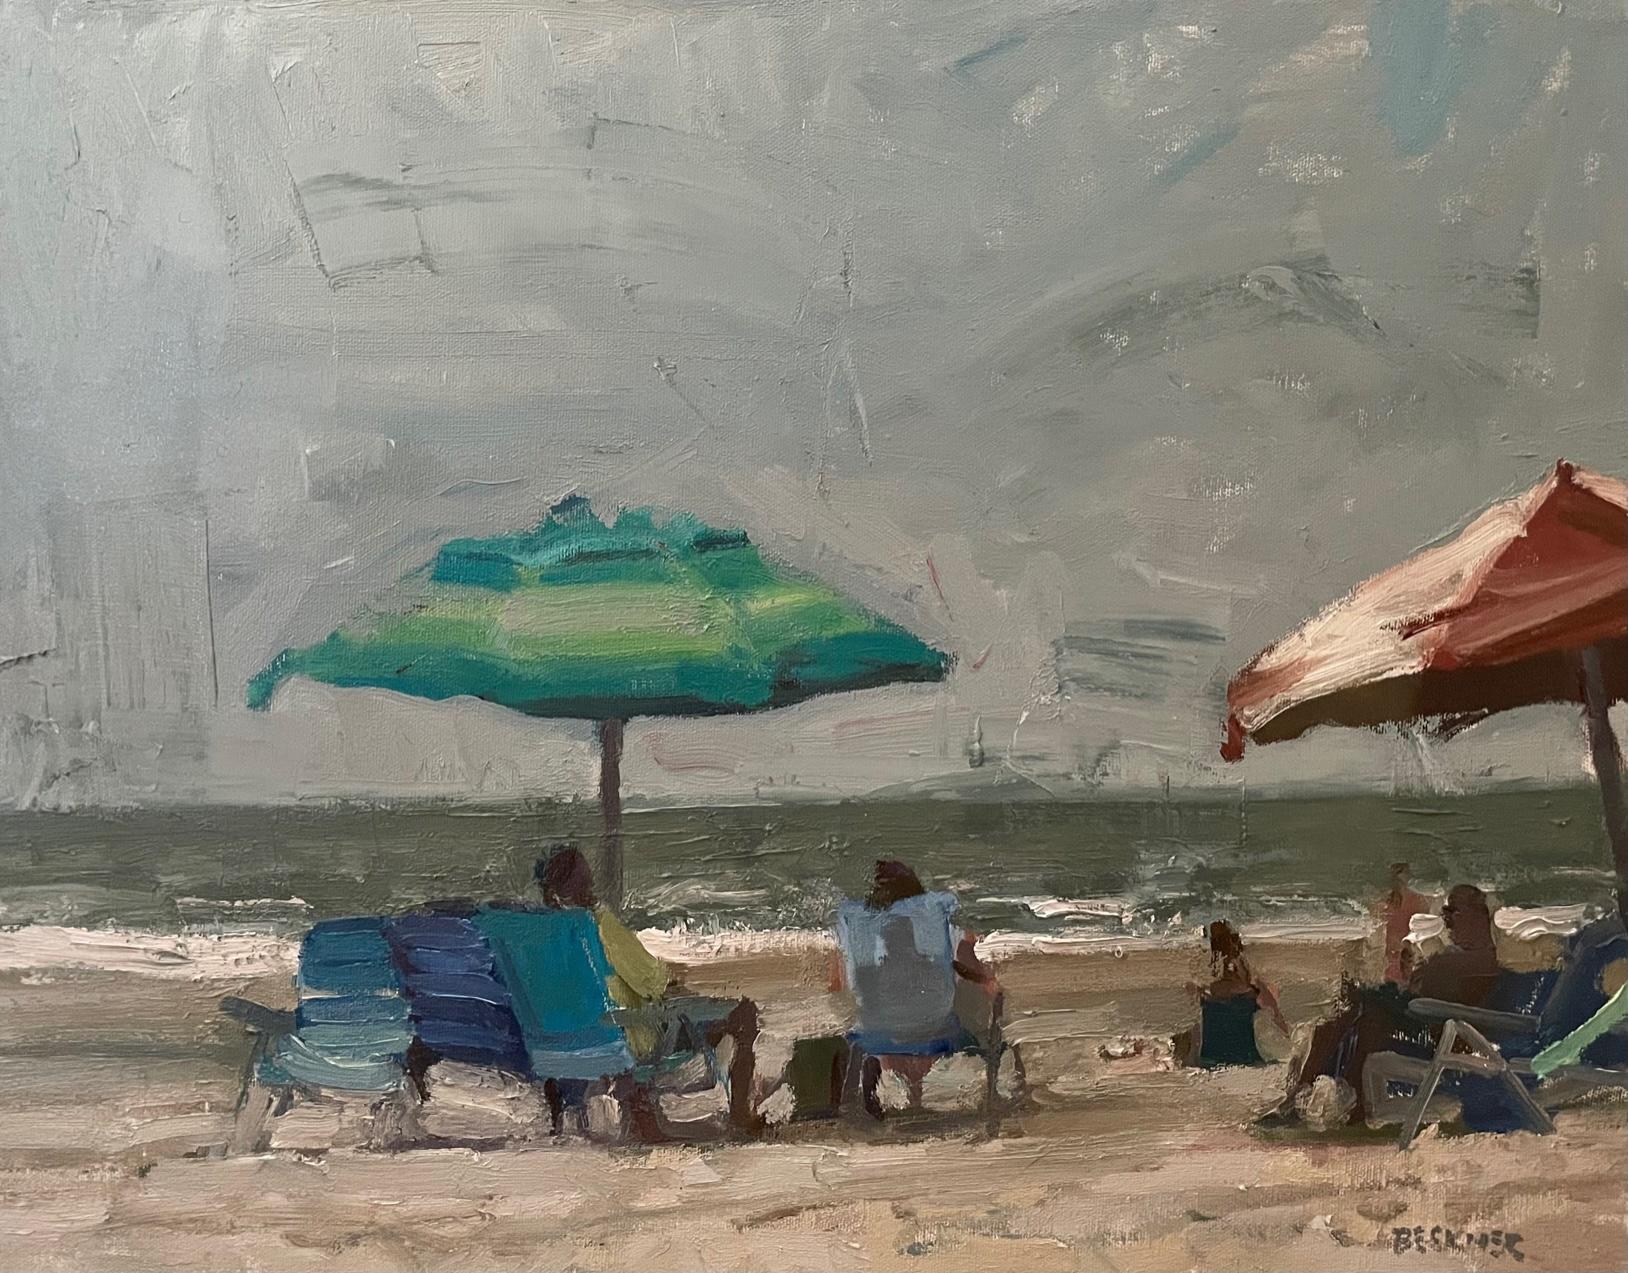 DANA BEACH IN GRAYS Oil on Panel,  Impressionism 18x24,  CA Beaches Figurative - Gray Figurative Painting by Jim Beckner